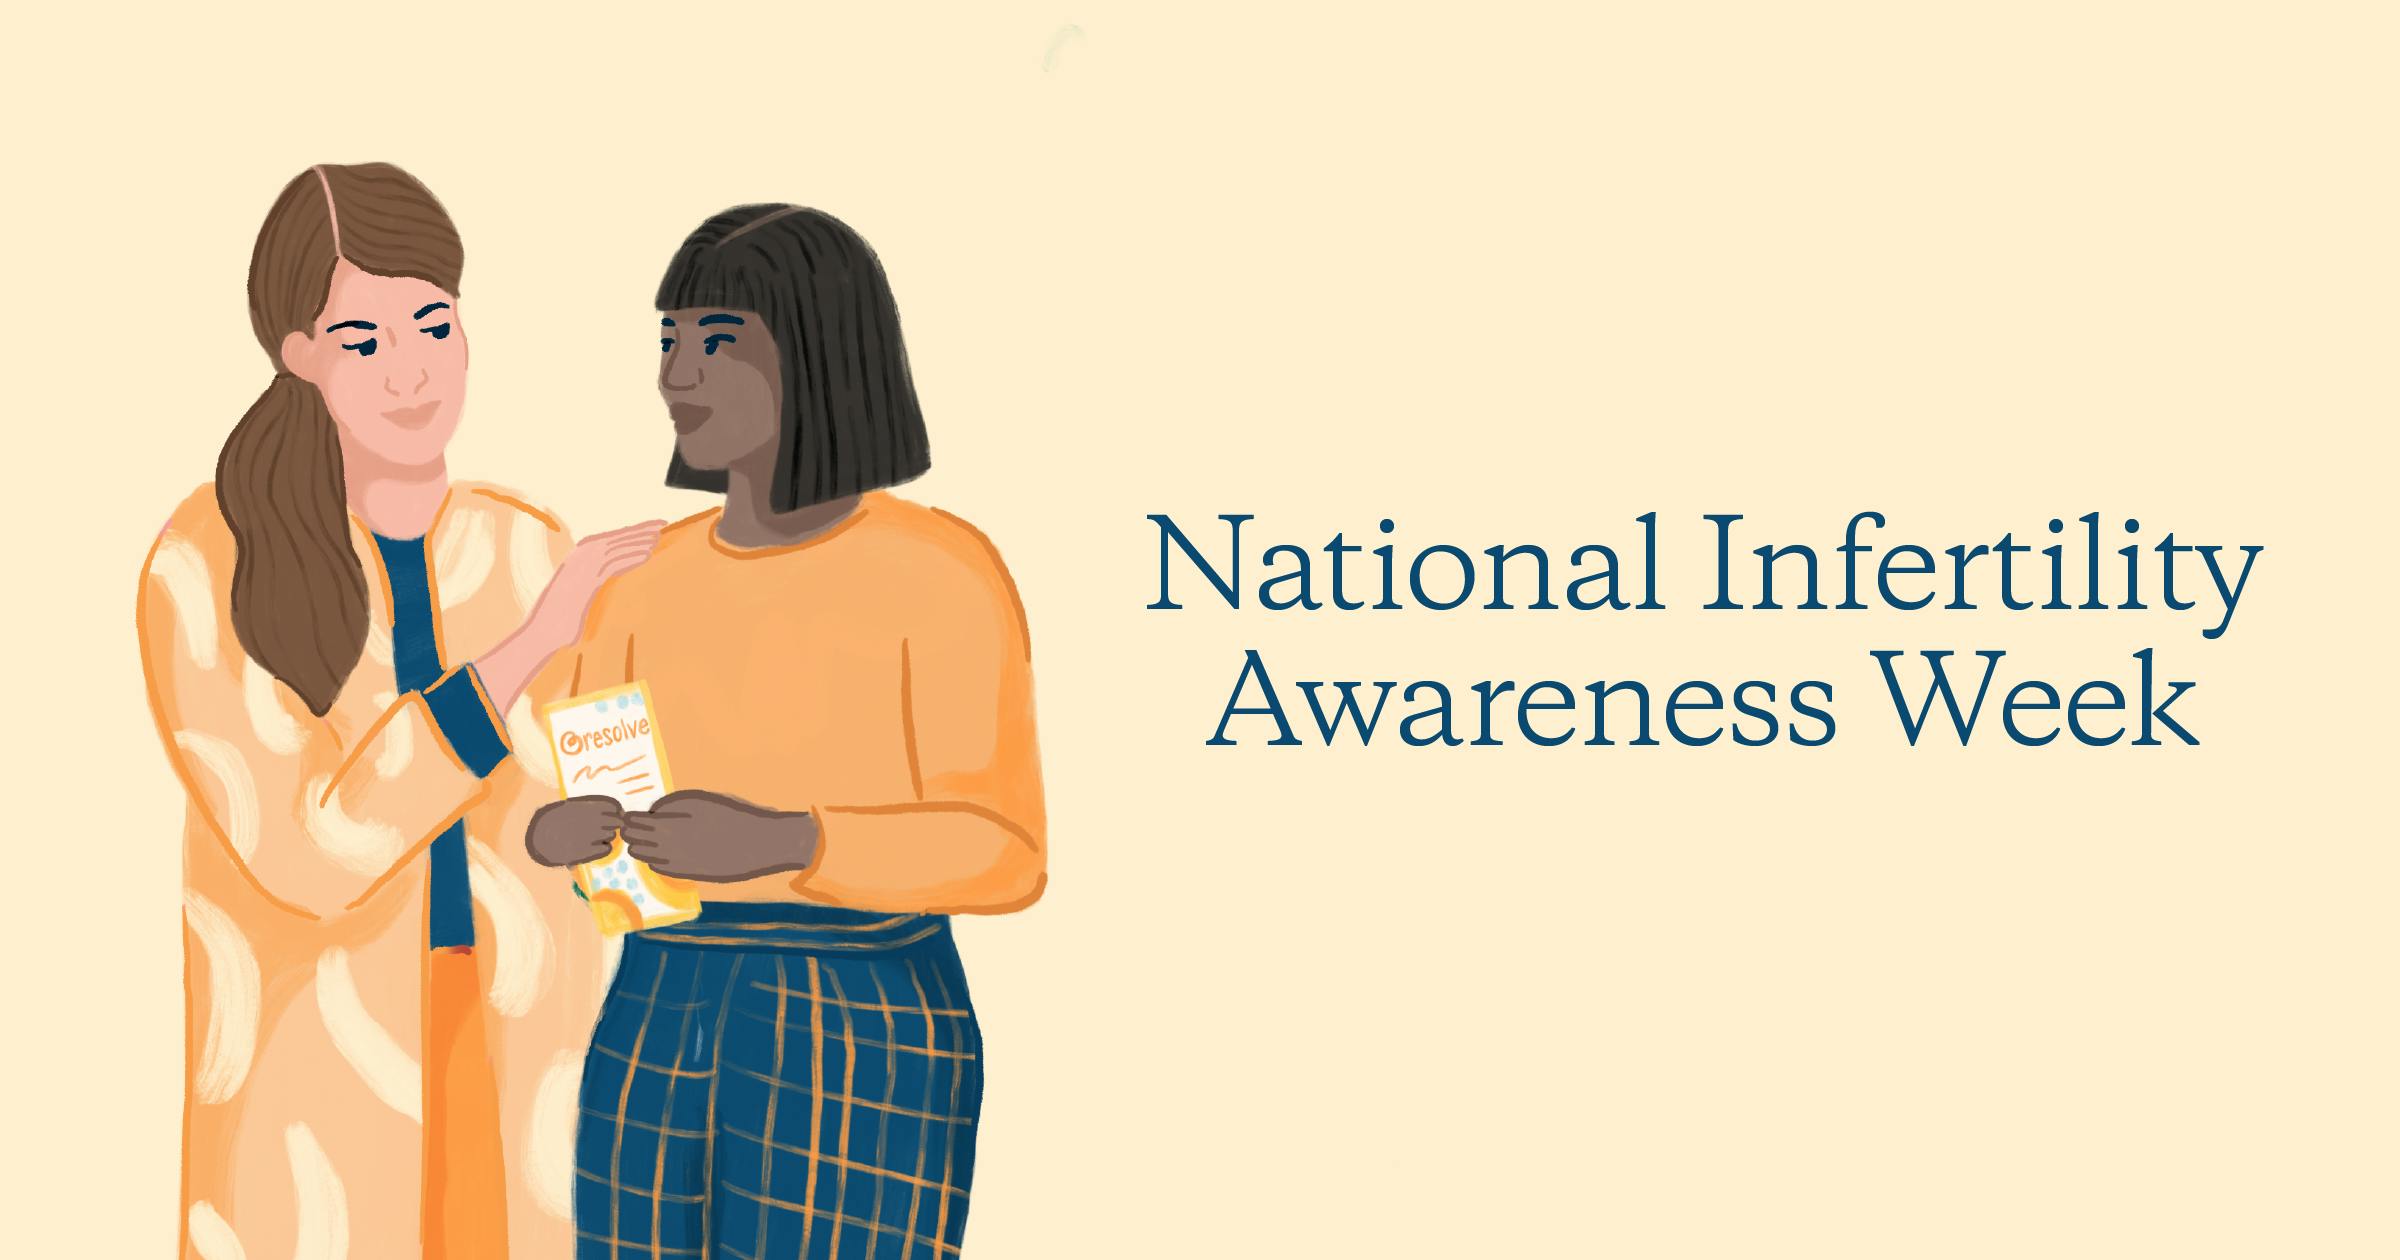 National infertility awareness week 